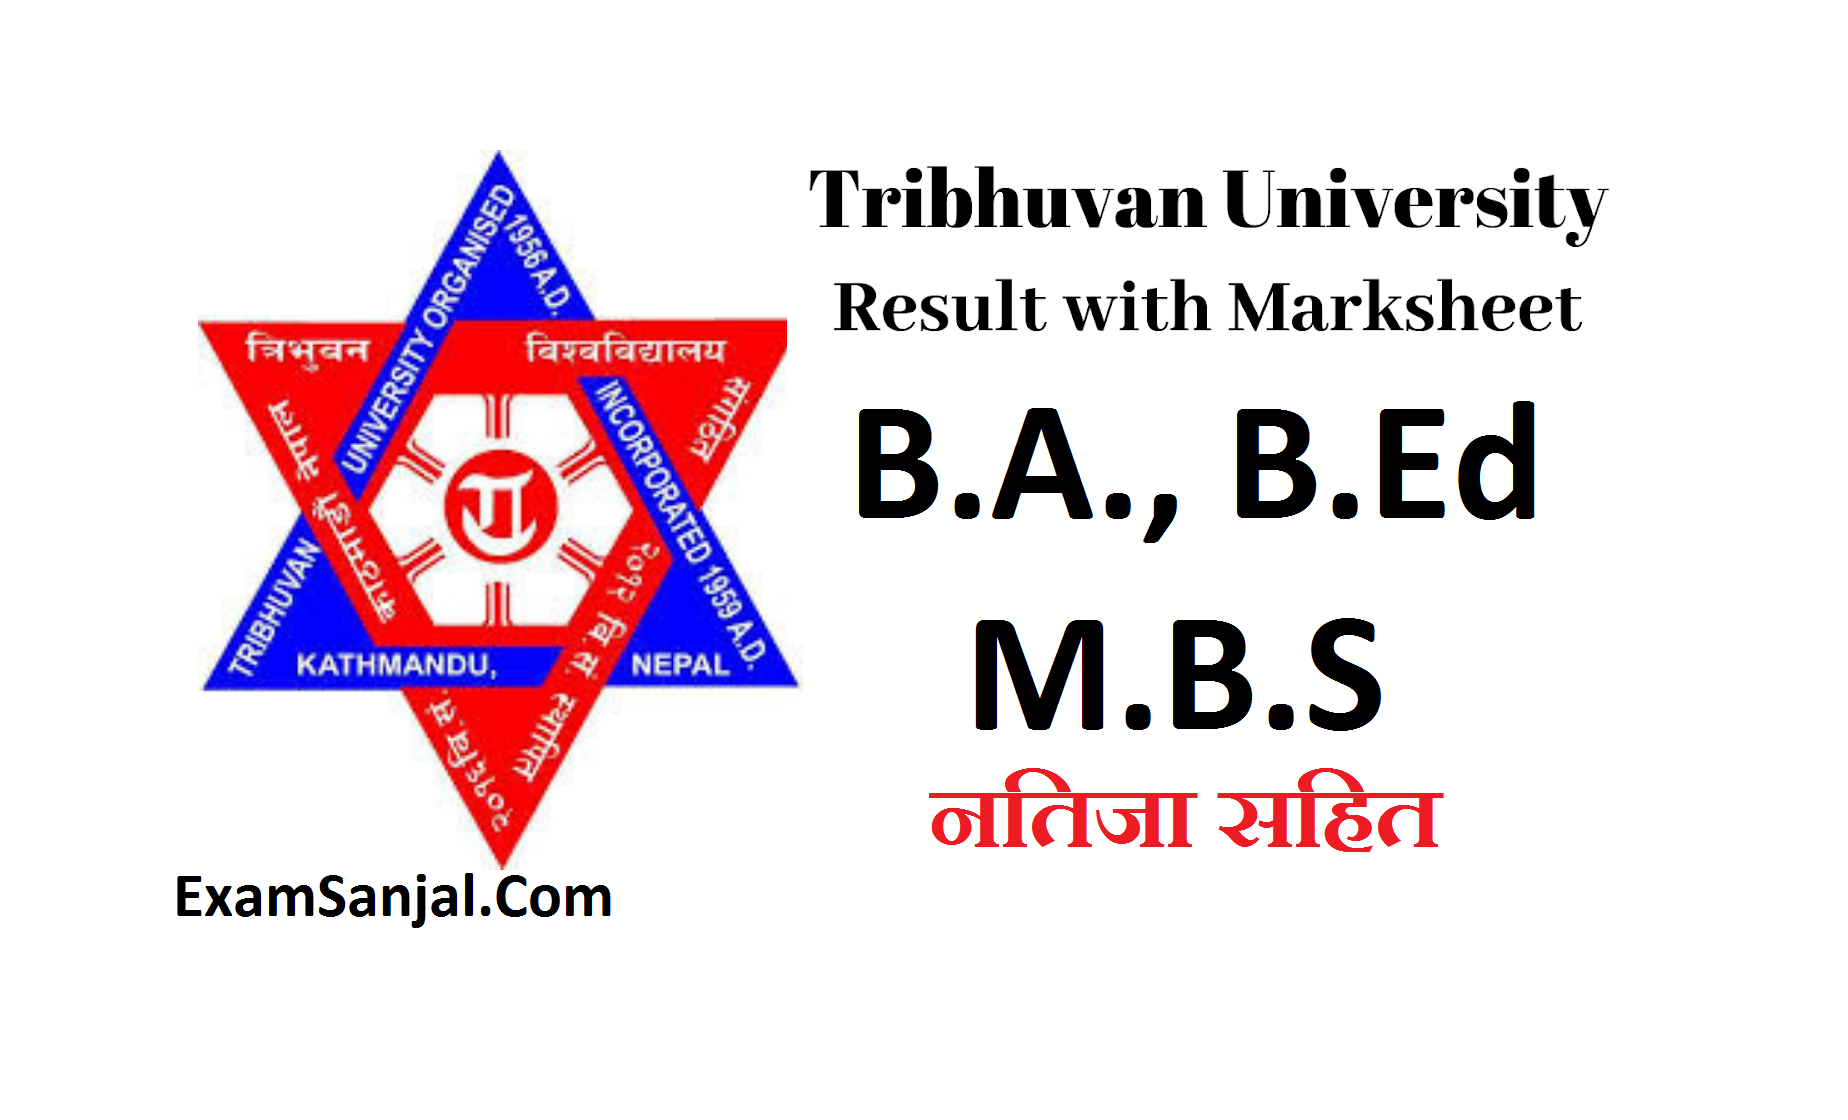 B.A. Third Year, B.Ed Third Year & M.B.S First Year Exam Result by T.U.